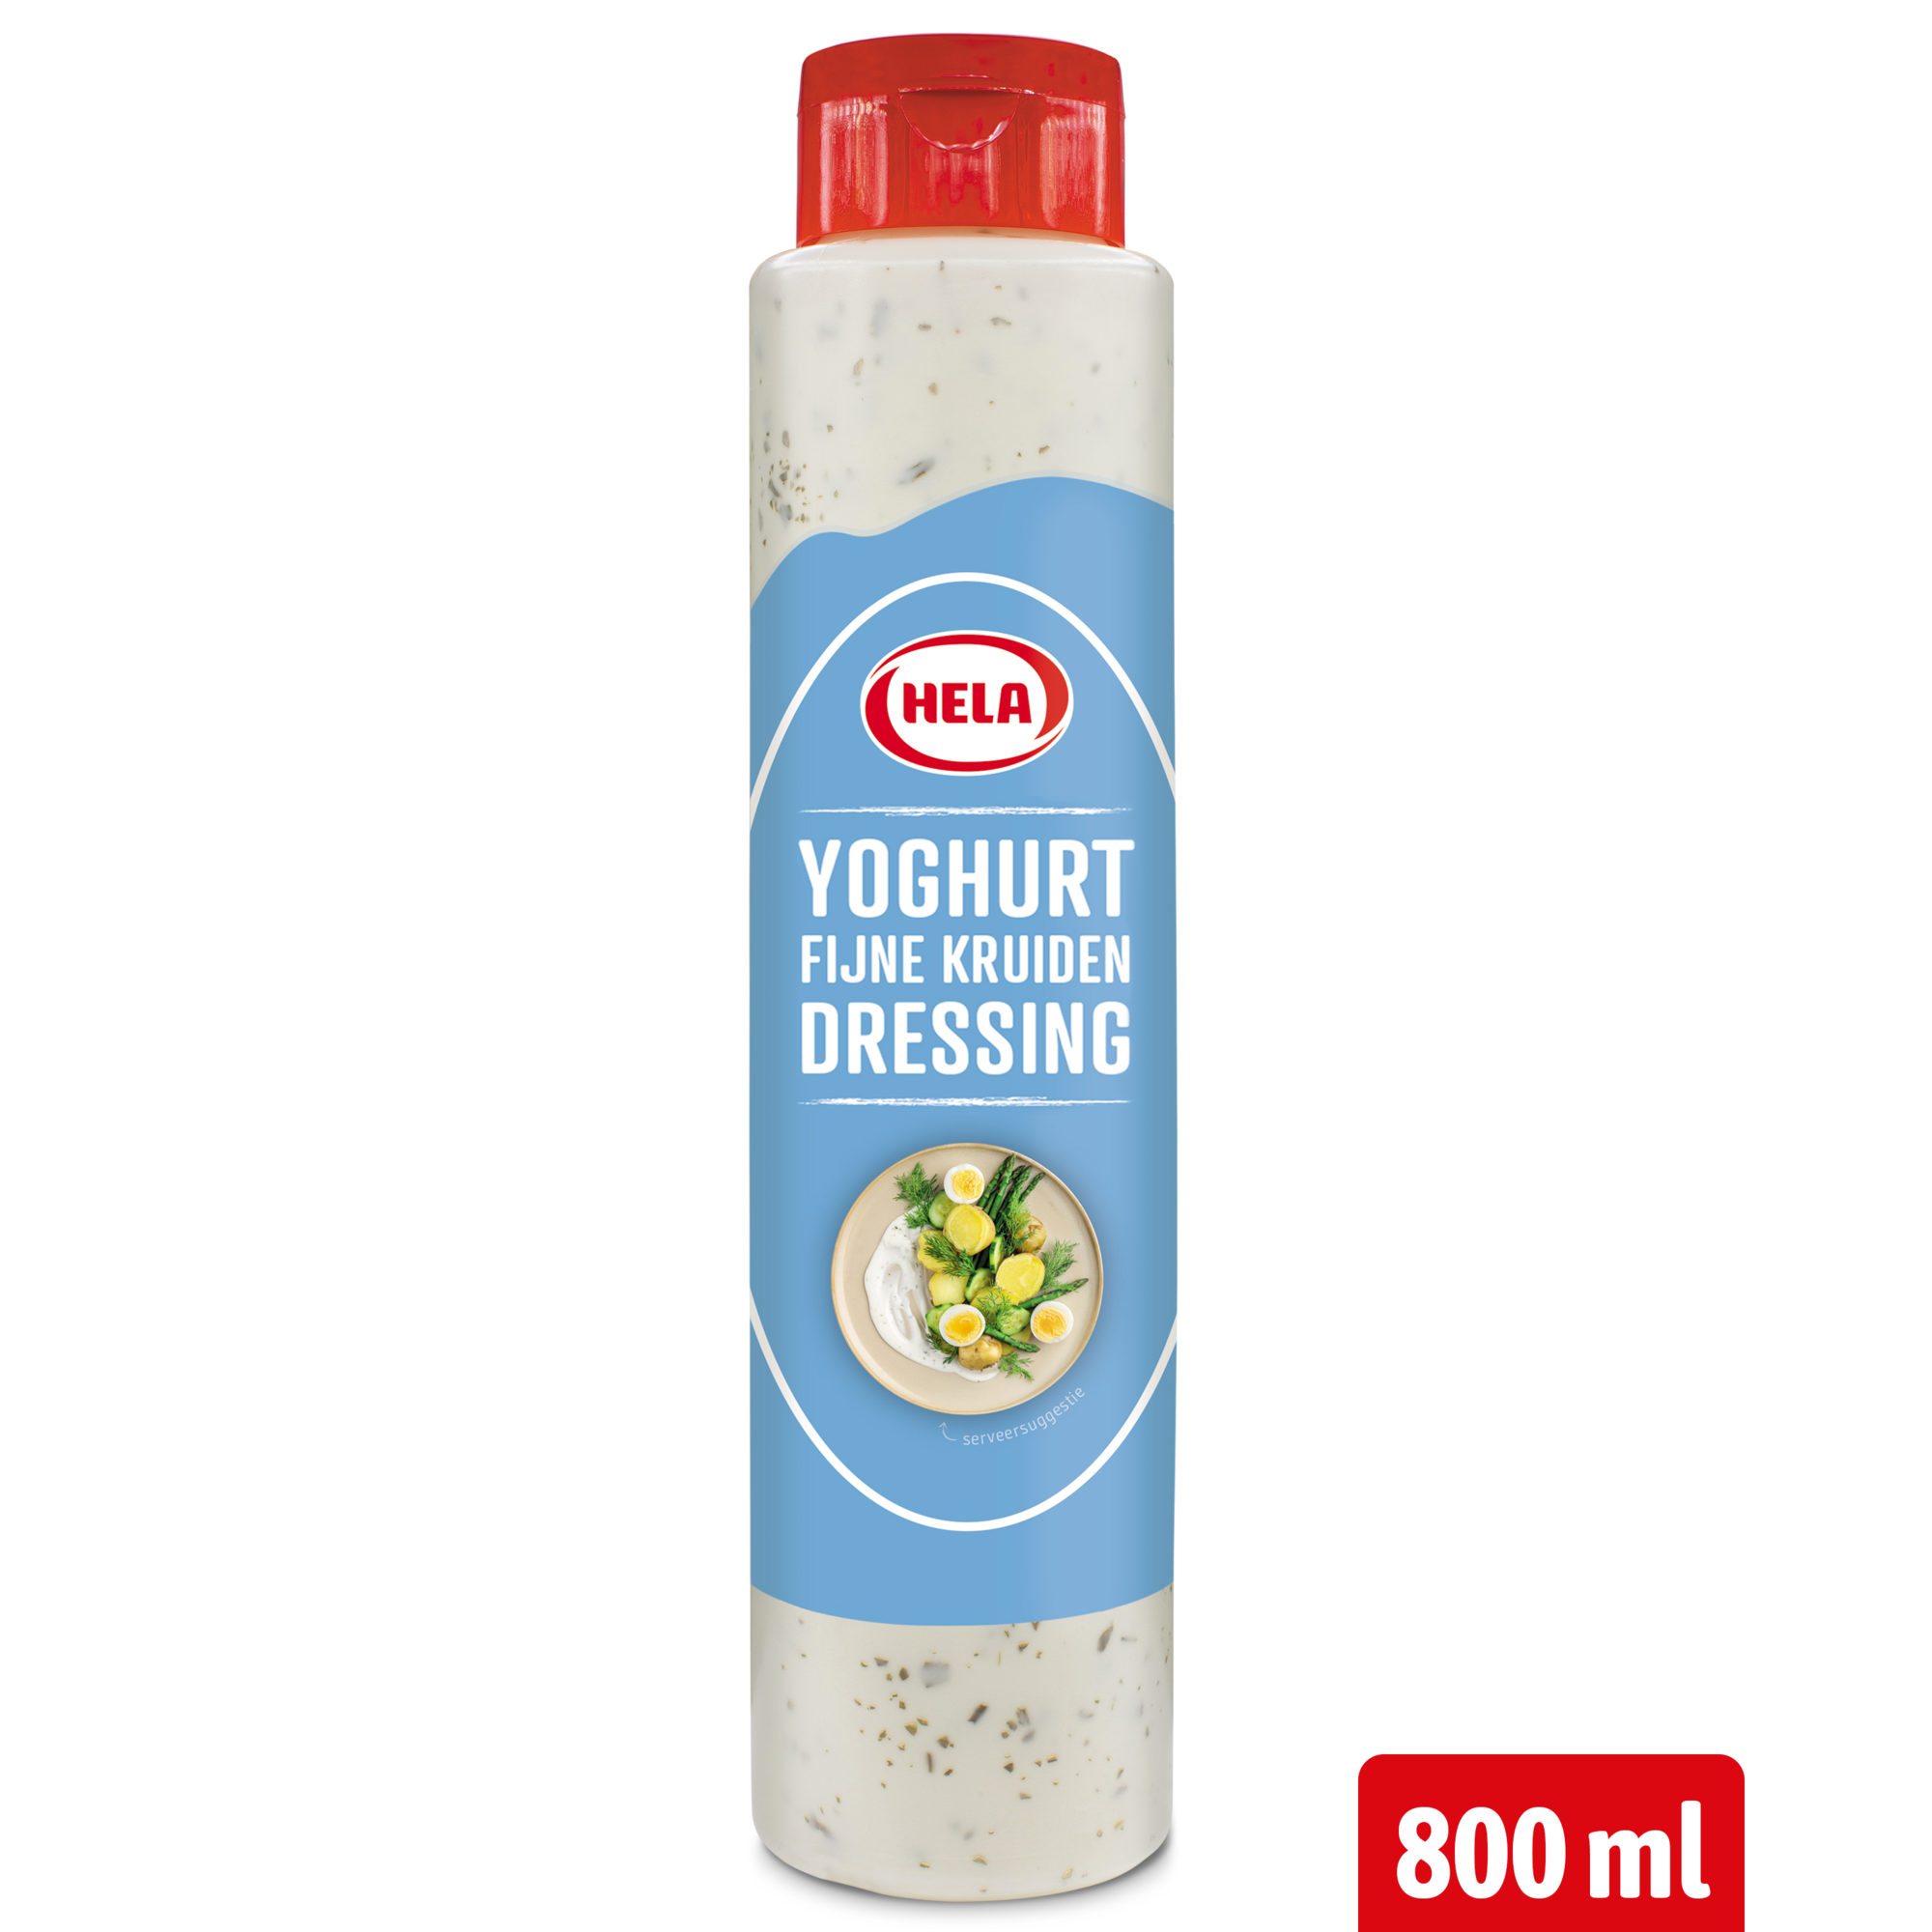 60401 S&s yoghurt dressing tube 1x800 ml